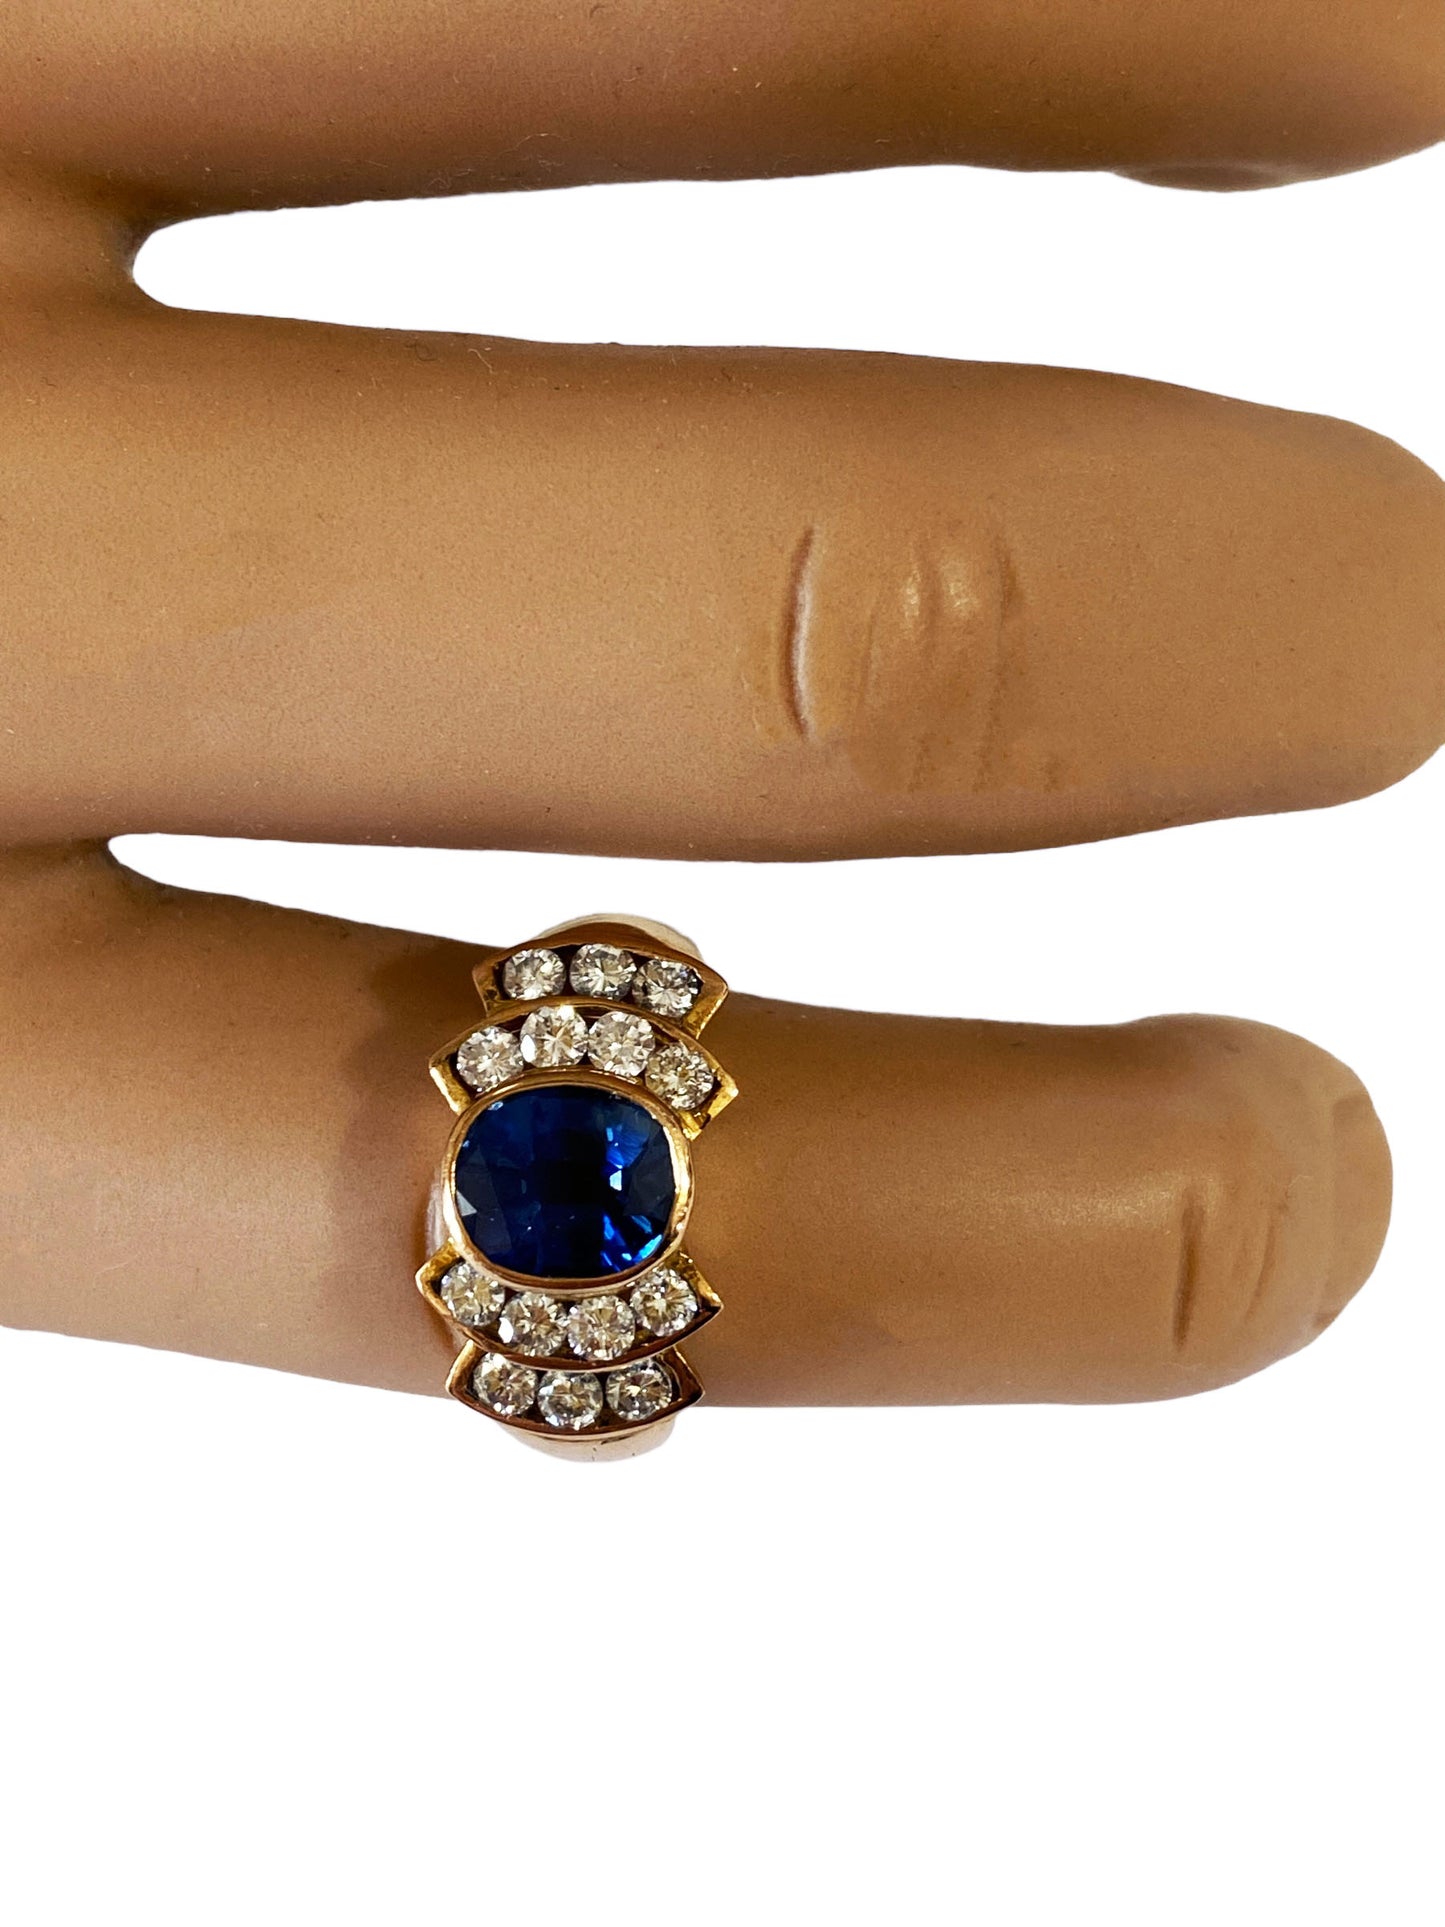 #1 Mid Century 18K Gold Sapphire and Diamond Ring